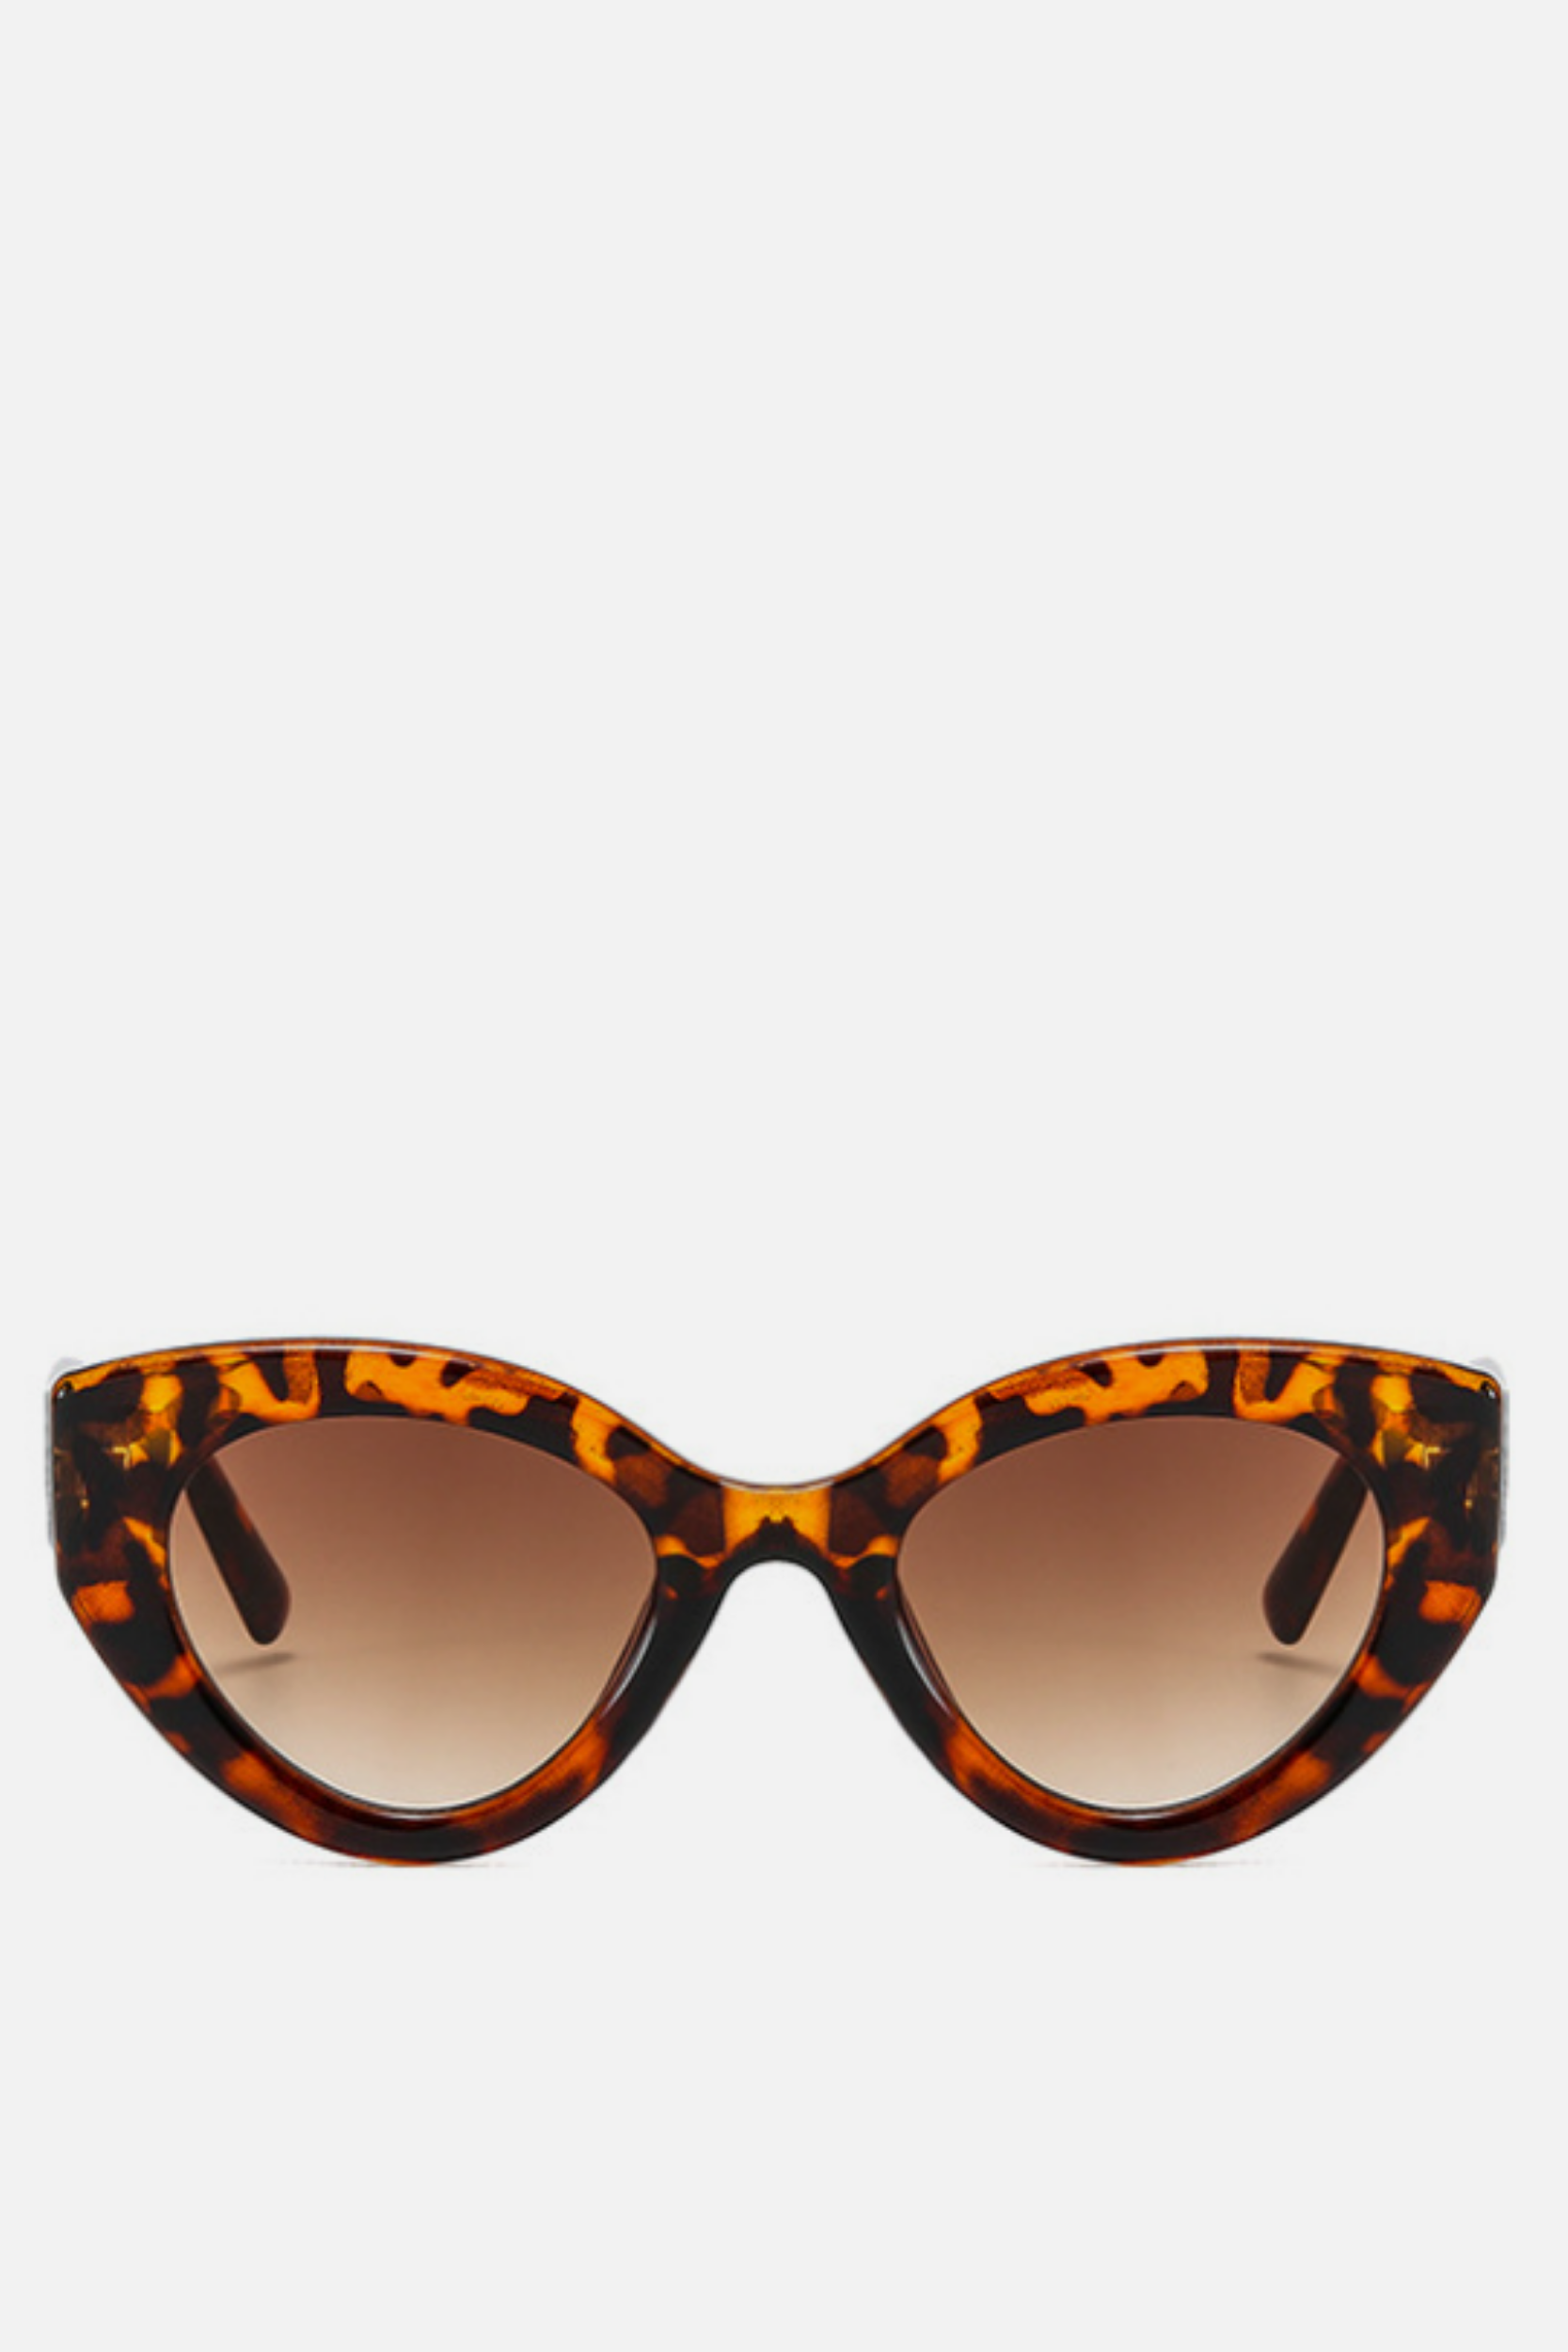 POSITANO Leopard Oversized Cat Eye Sunglasses